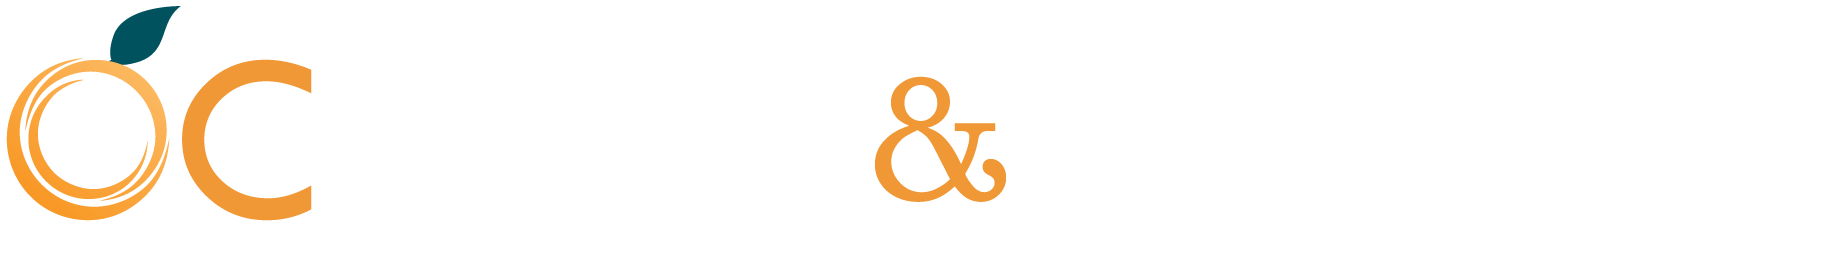 Single logo